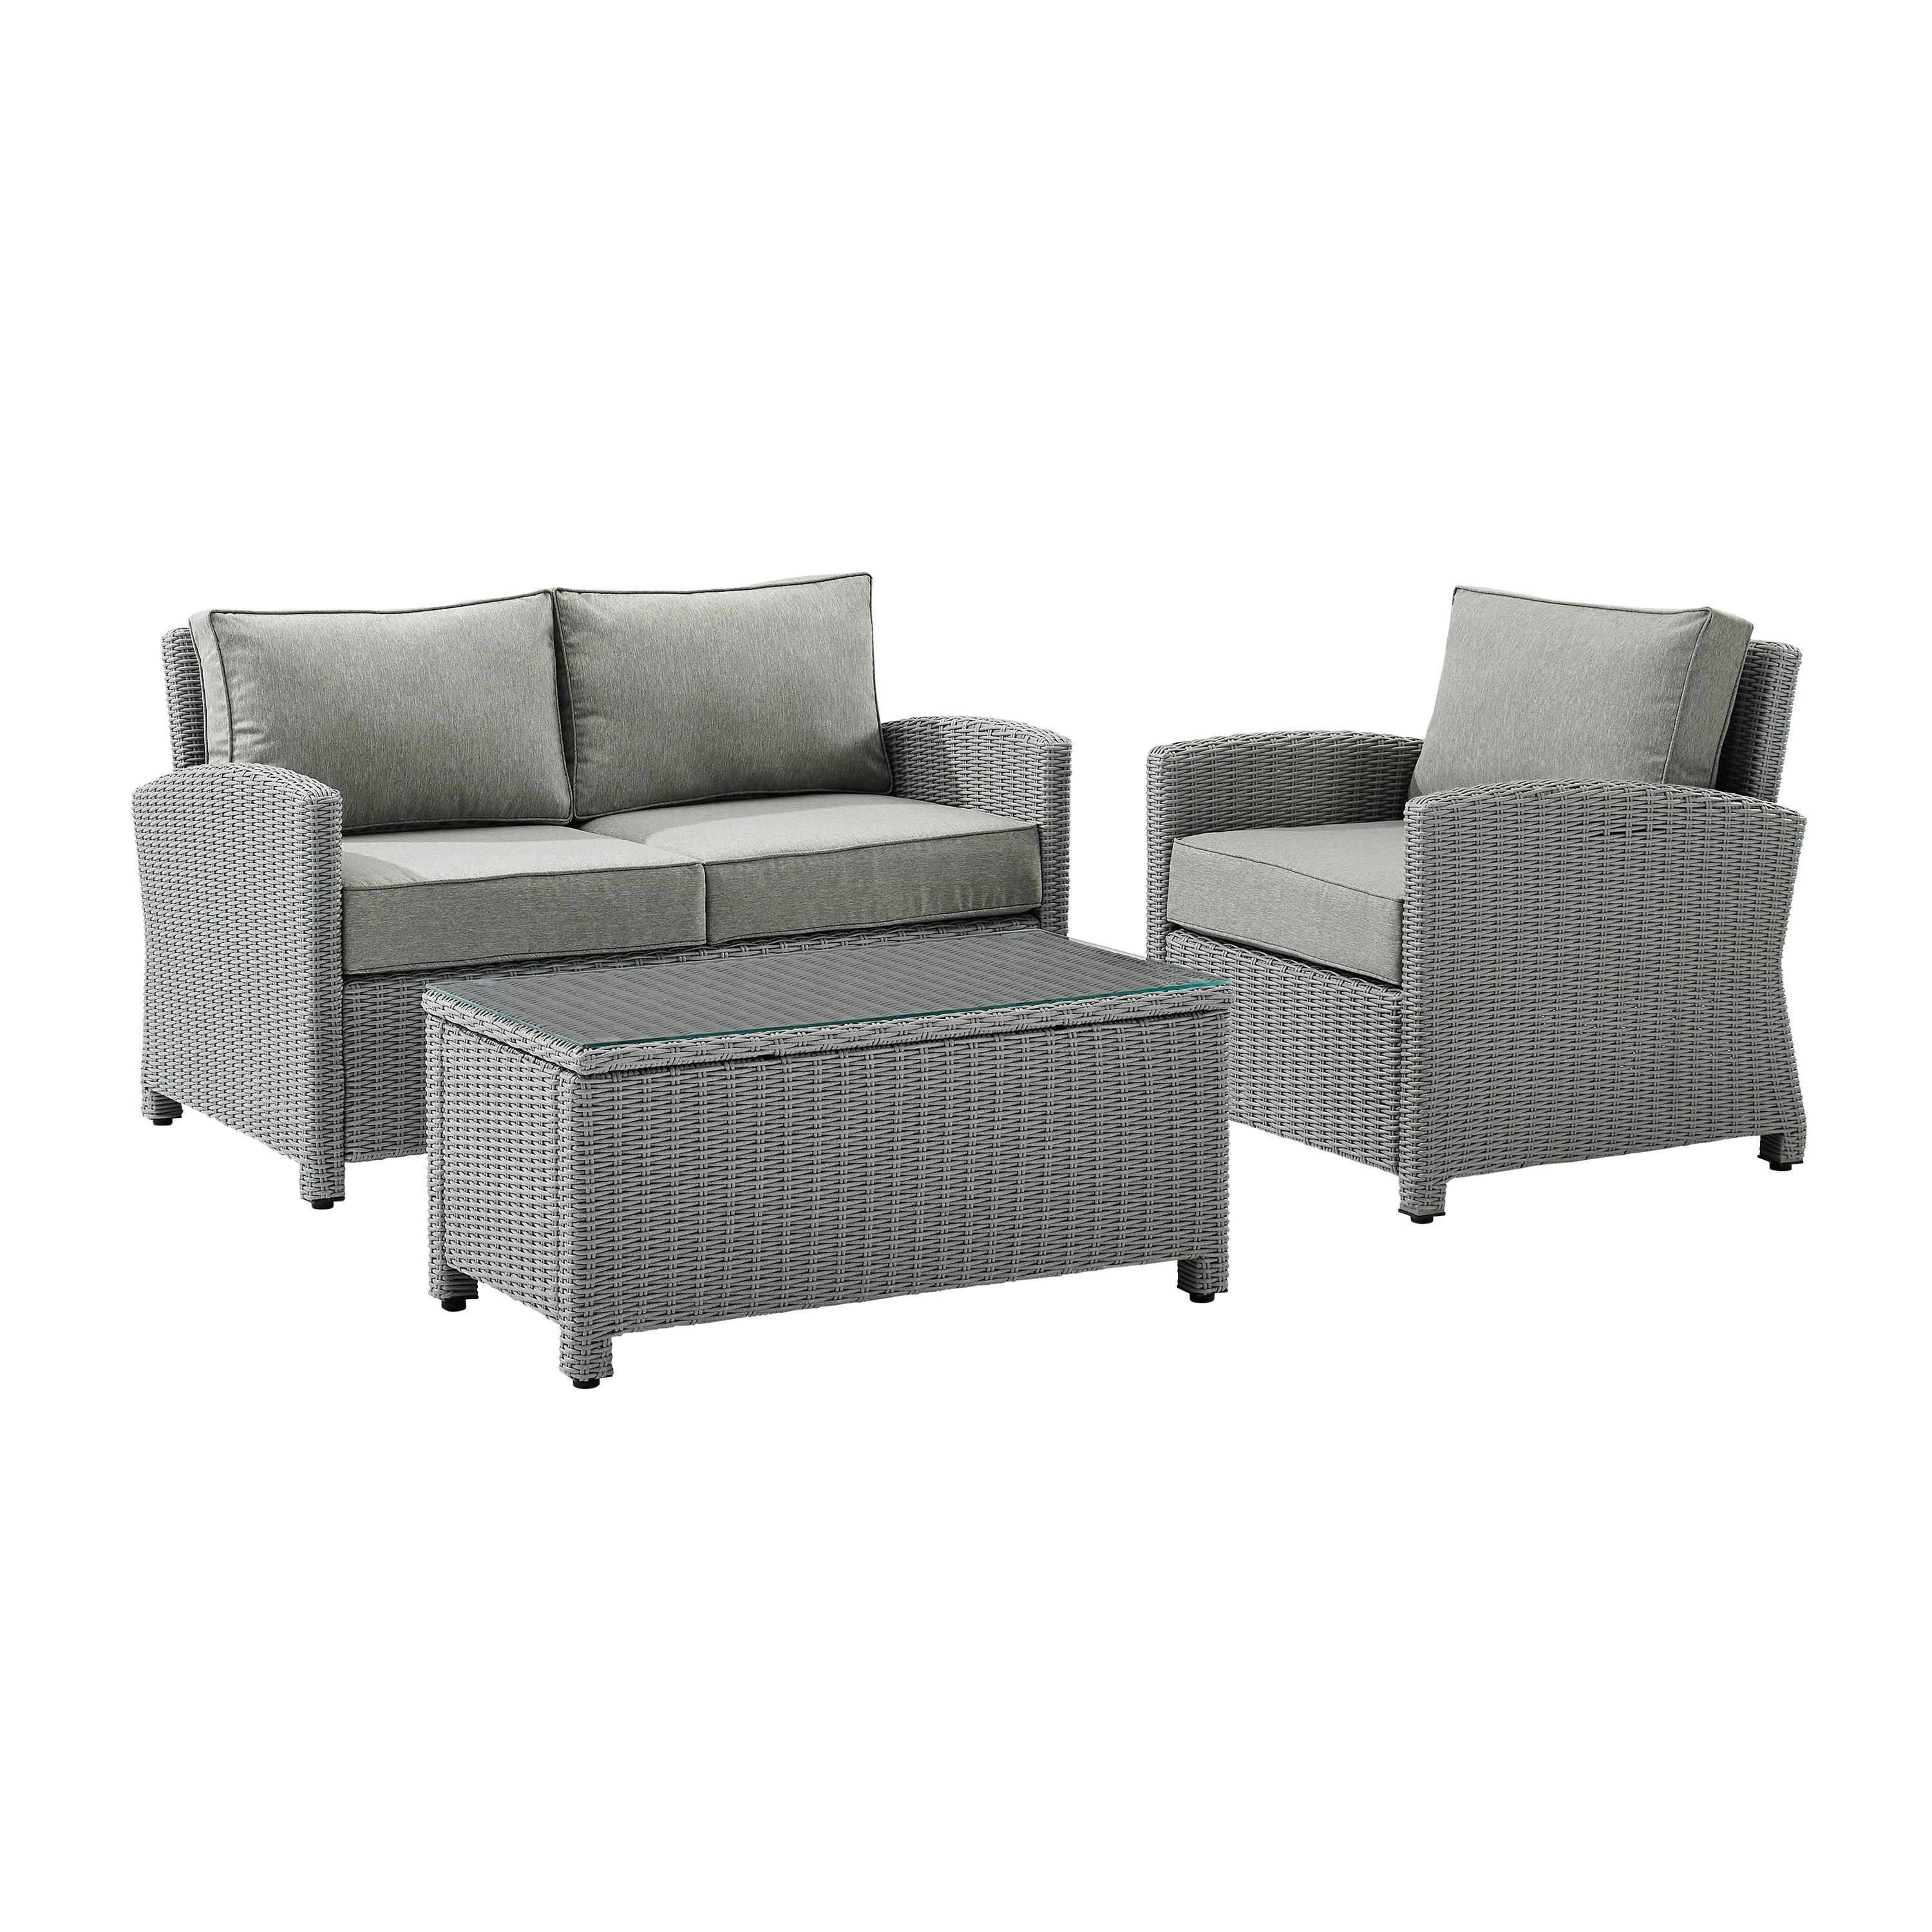 Crosley Bradenton 3 Piece Wicker Patio Sofa Set in Gray - image 4 of 7